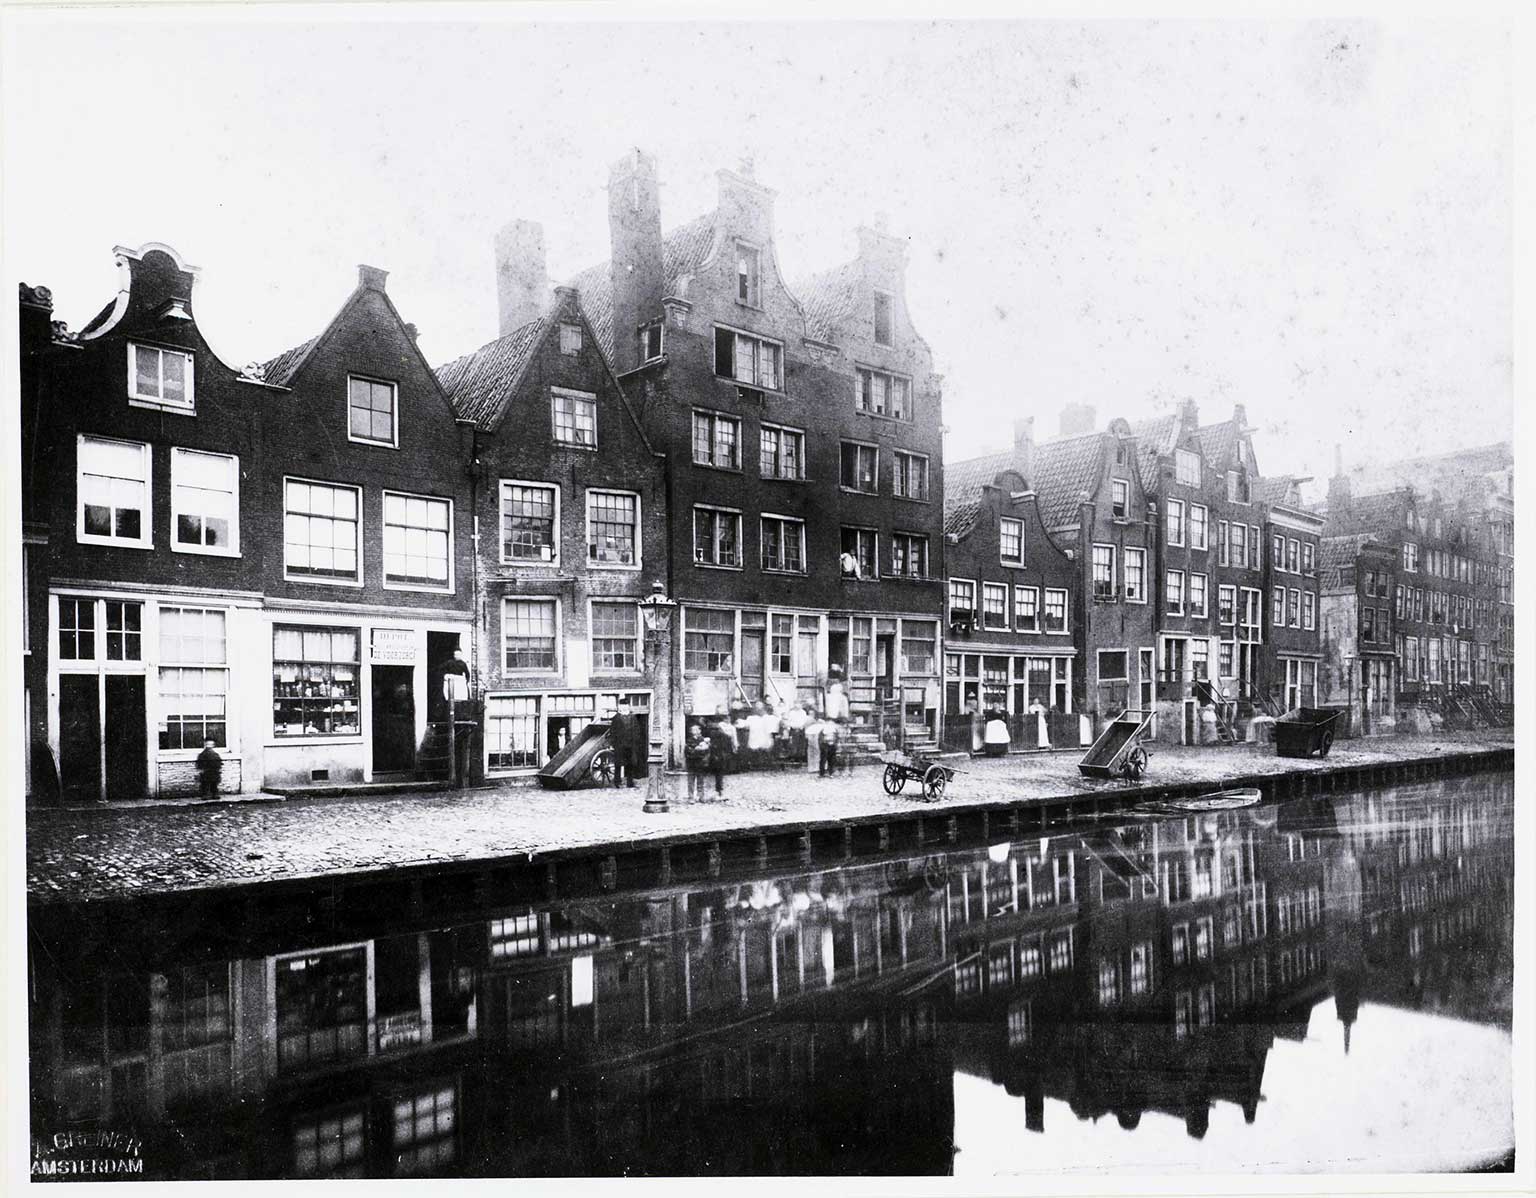 Elandsgracht 65-101, Amsterdam, in 1880, still a canal